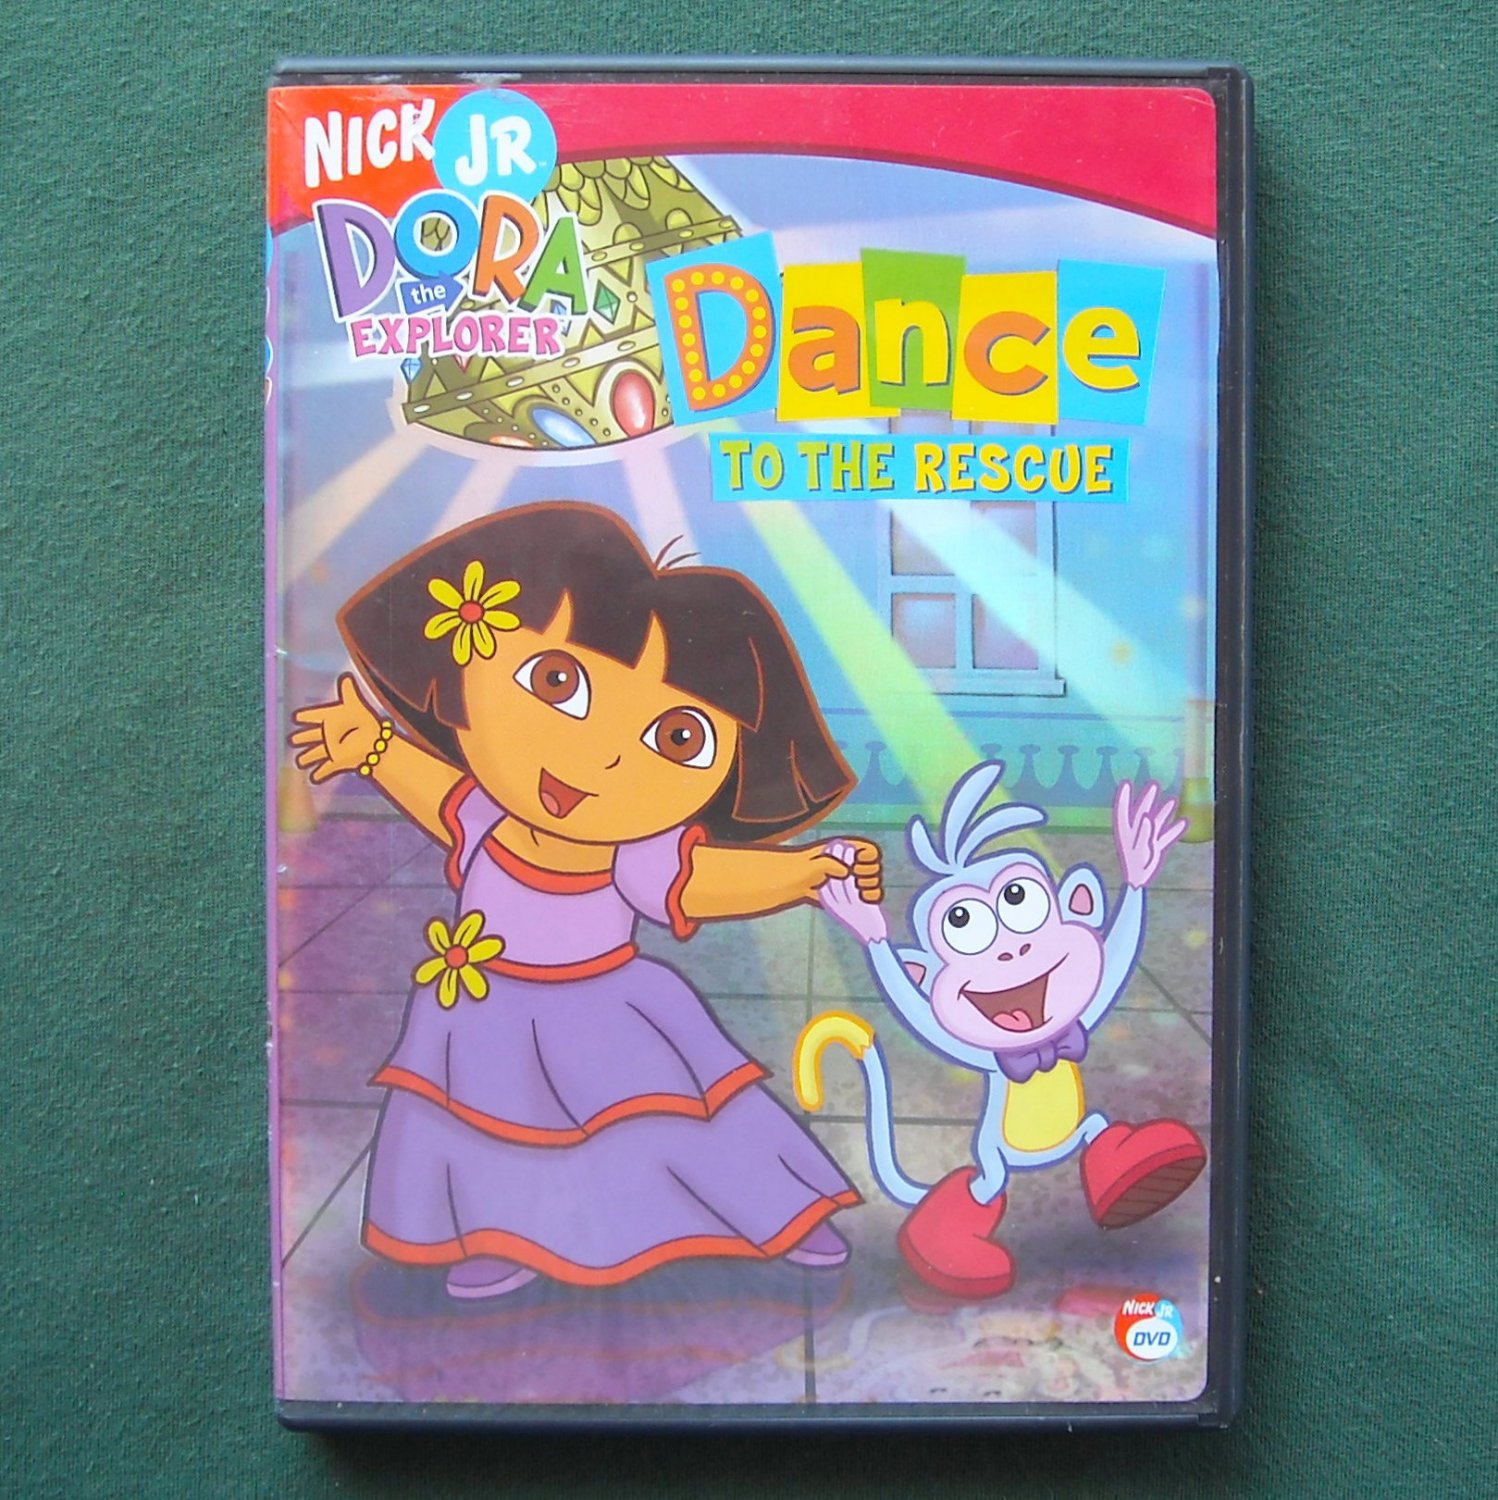 Nick Jr. Dora the Explorer Dance to the Rescue DVD